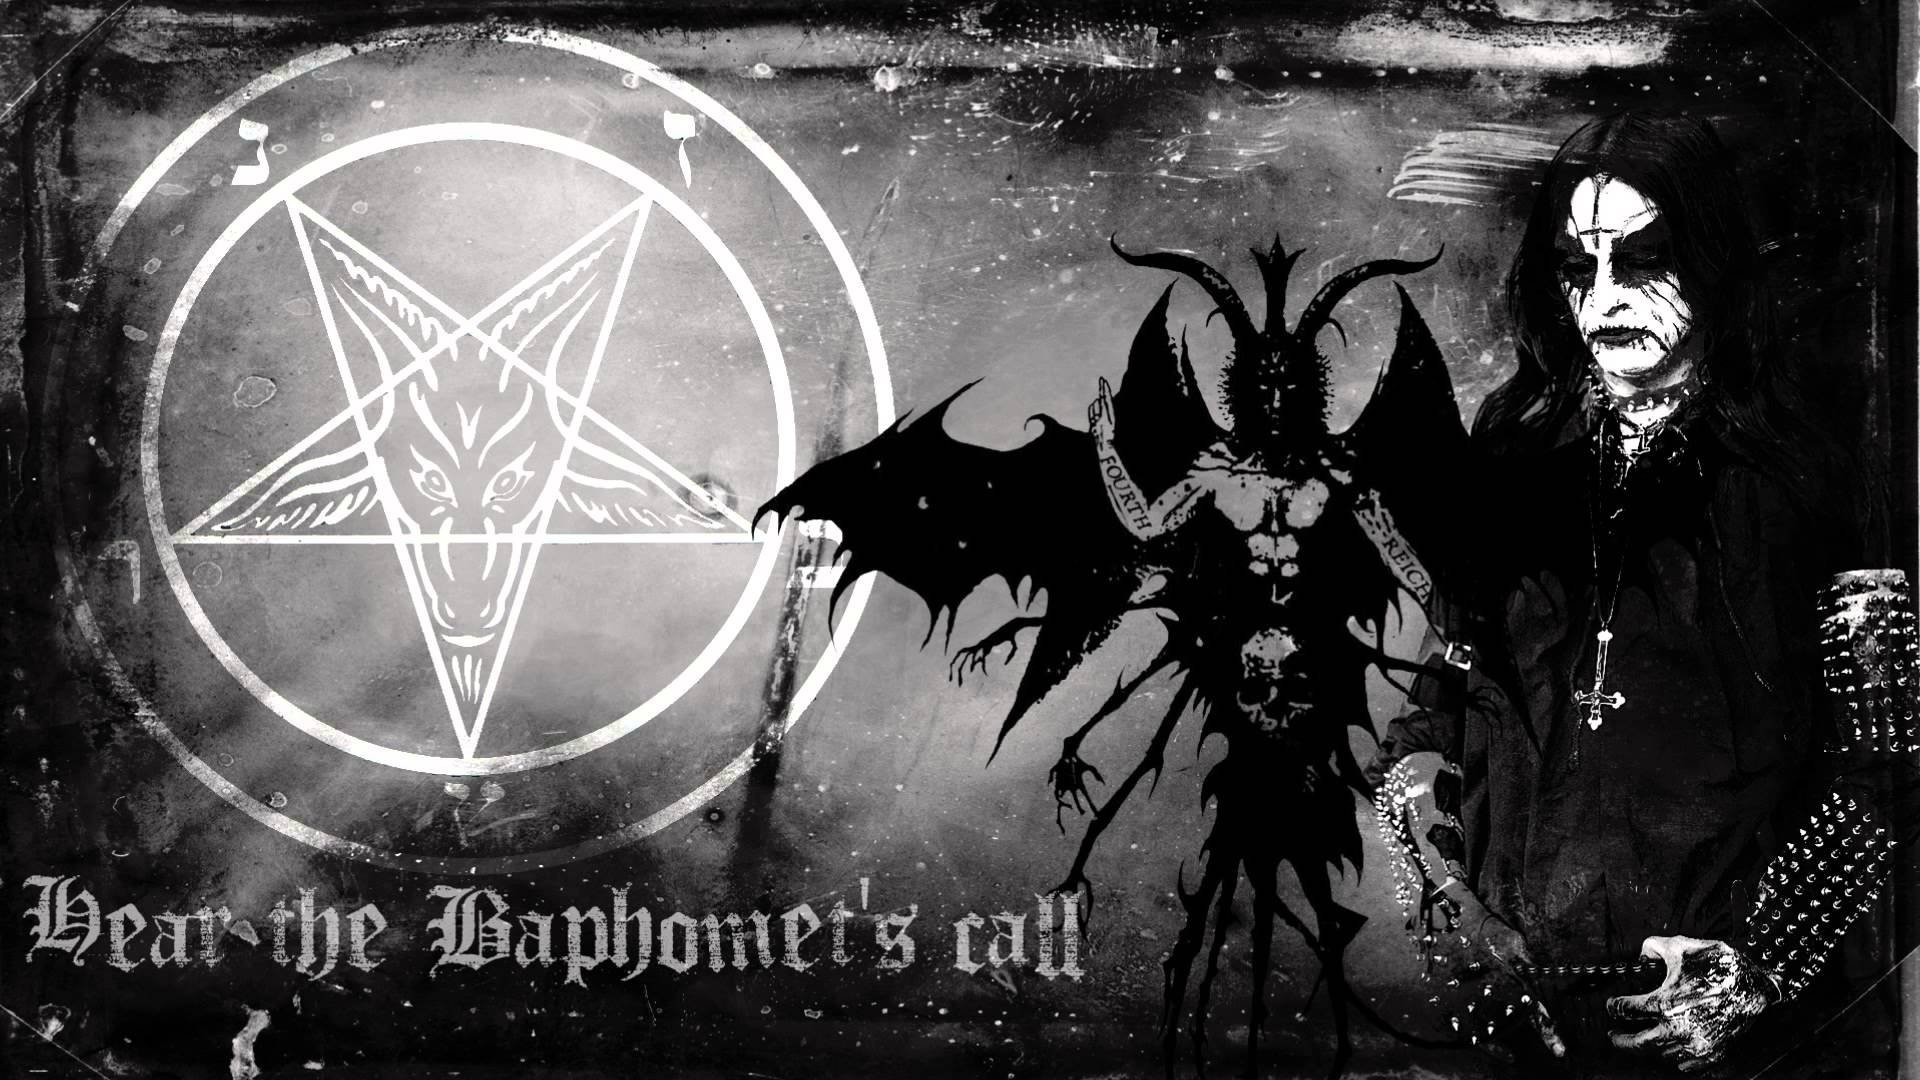 1920x1080 BEHEXEN black metal heavy poster dark occult satanic pentagram h wallpaper